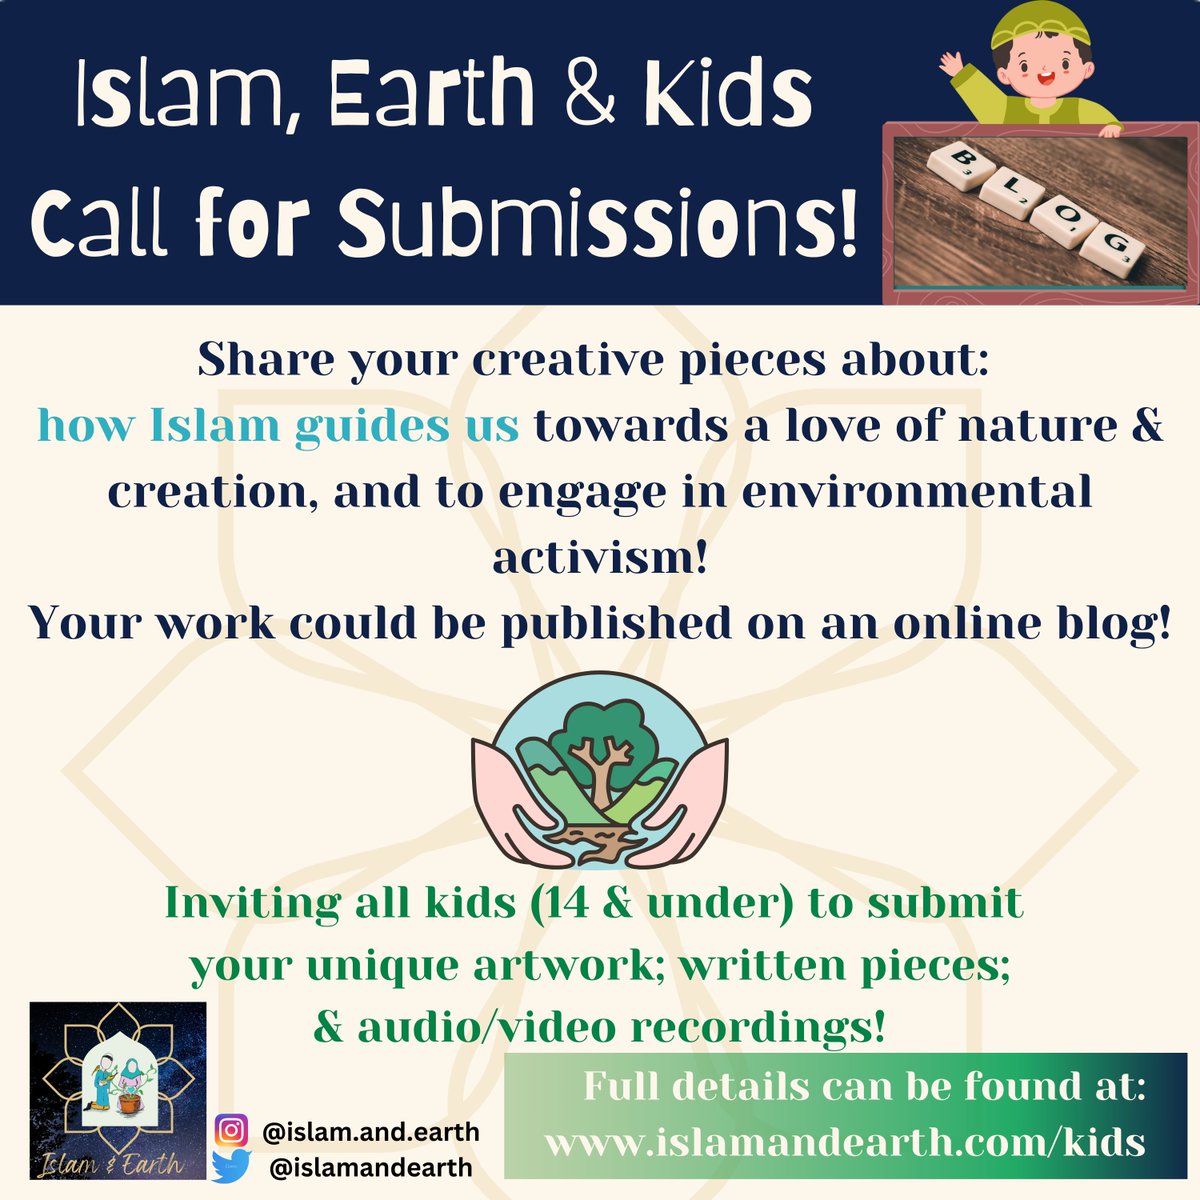 Calling all kids! Send in your creative environmental blog ideas!
#muslimkids #muslimblogger #islamenvironment #sustainablemuslim